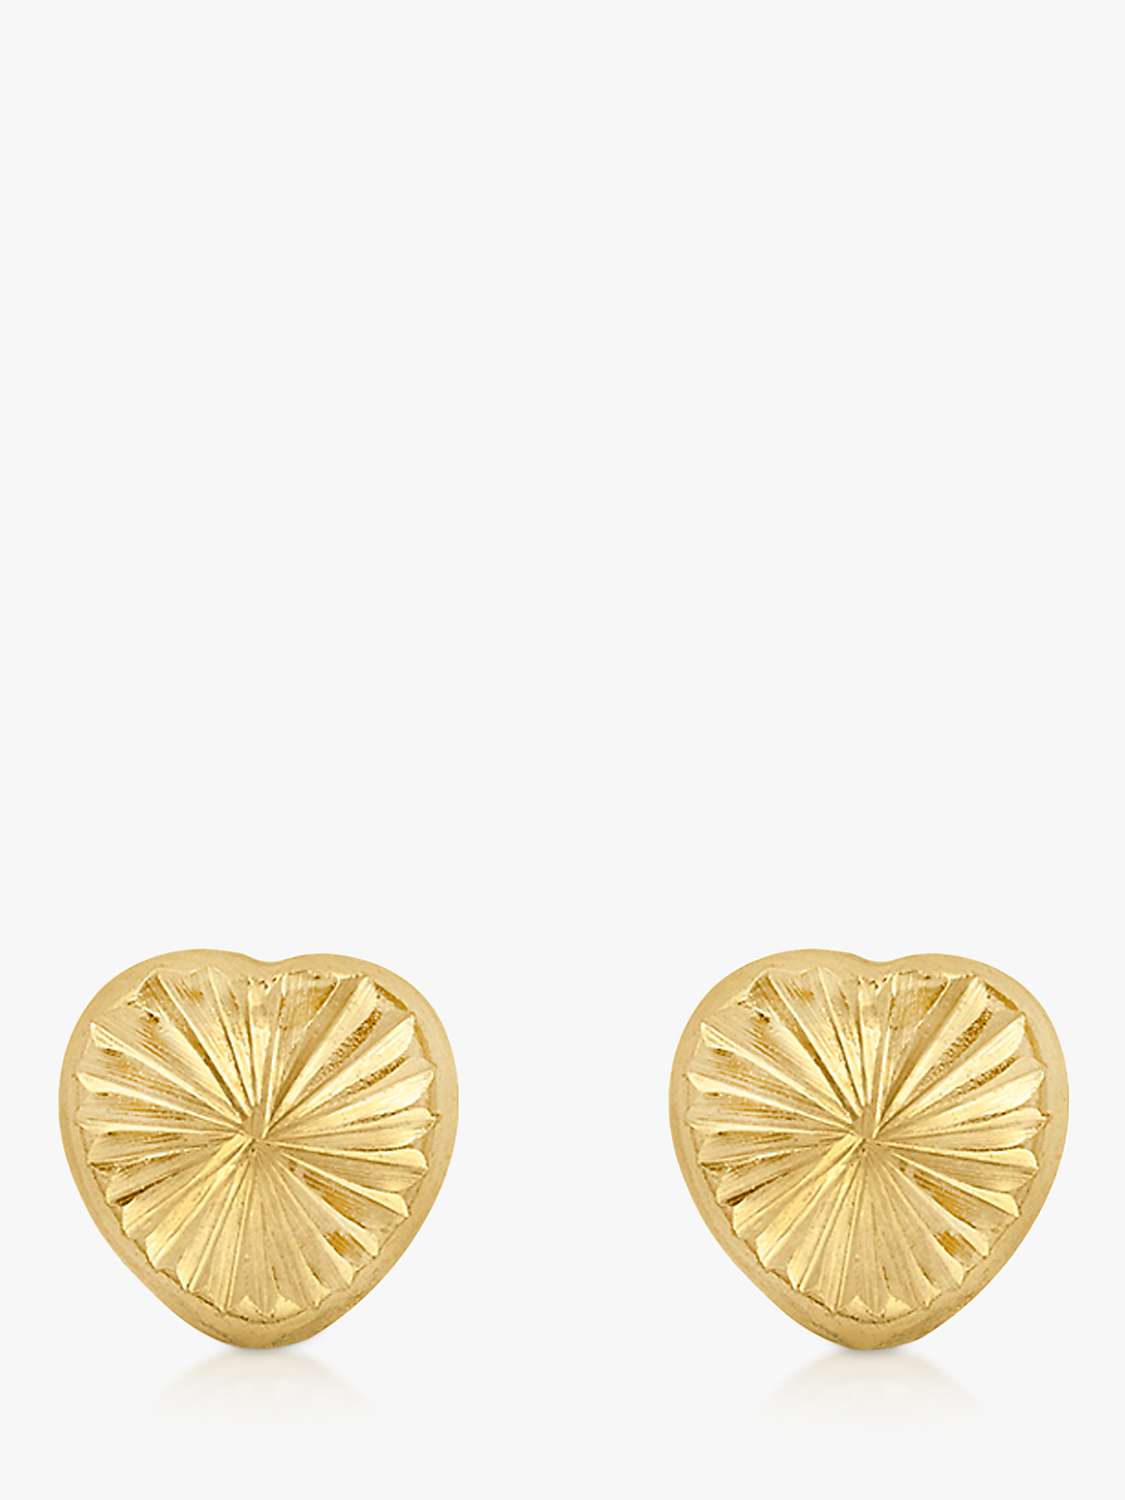 Buy IBB 9ct Gold Diamond Cut Heart Stud Earrings Online at johnlewis.com